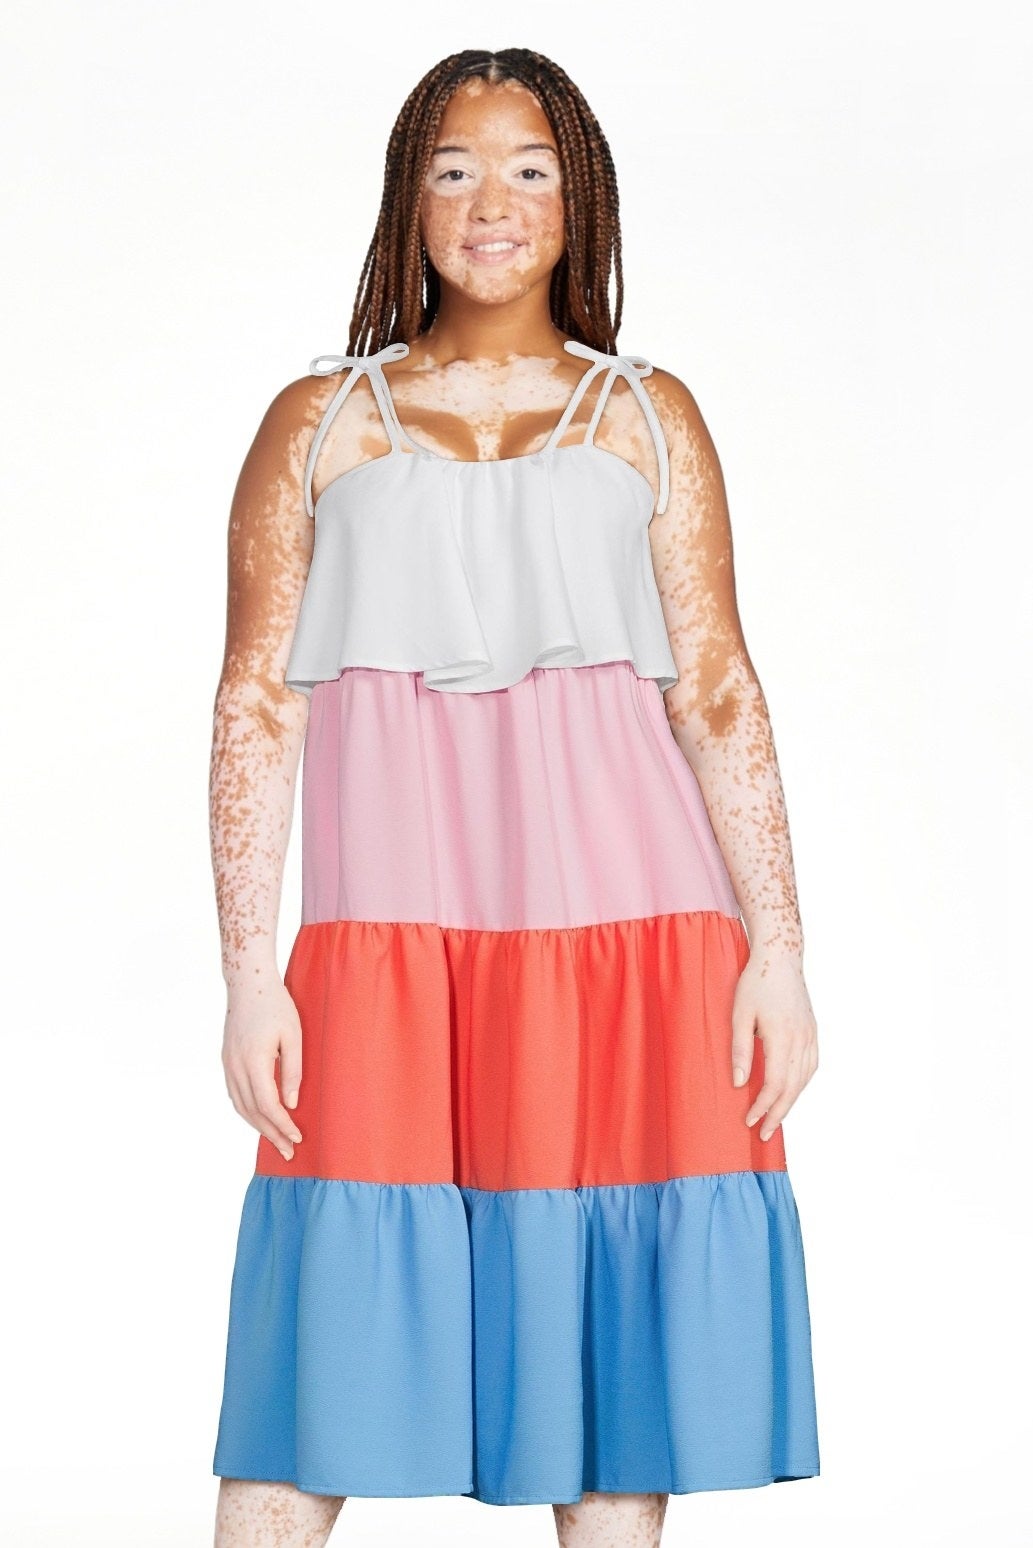 Model wearing the white/pink/orange/blue dress